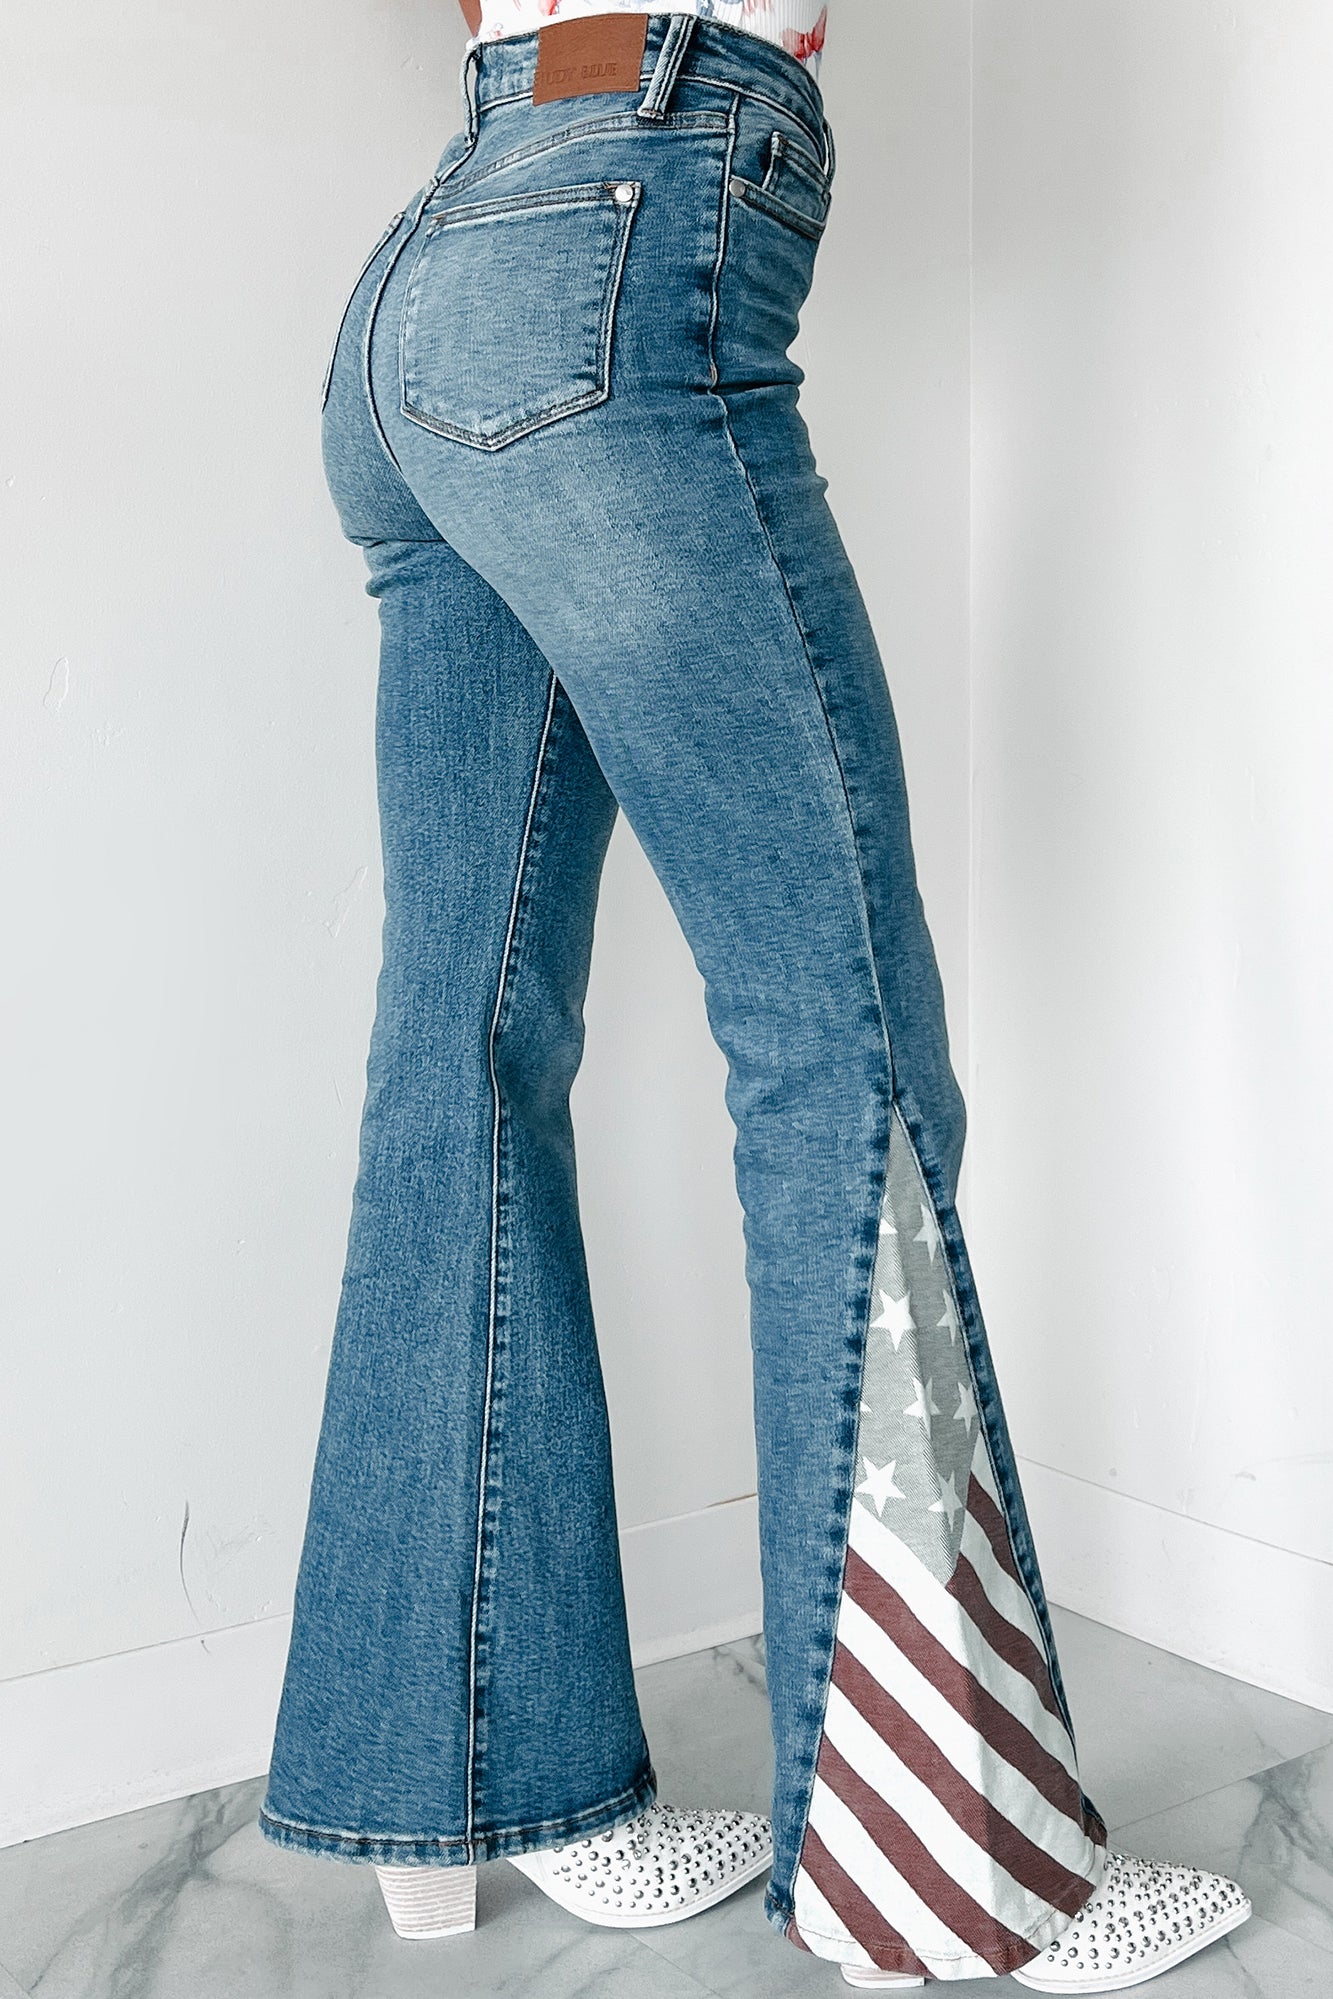 Born Brave American Print Judy Blue Flare Jeans (Medium Wash)